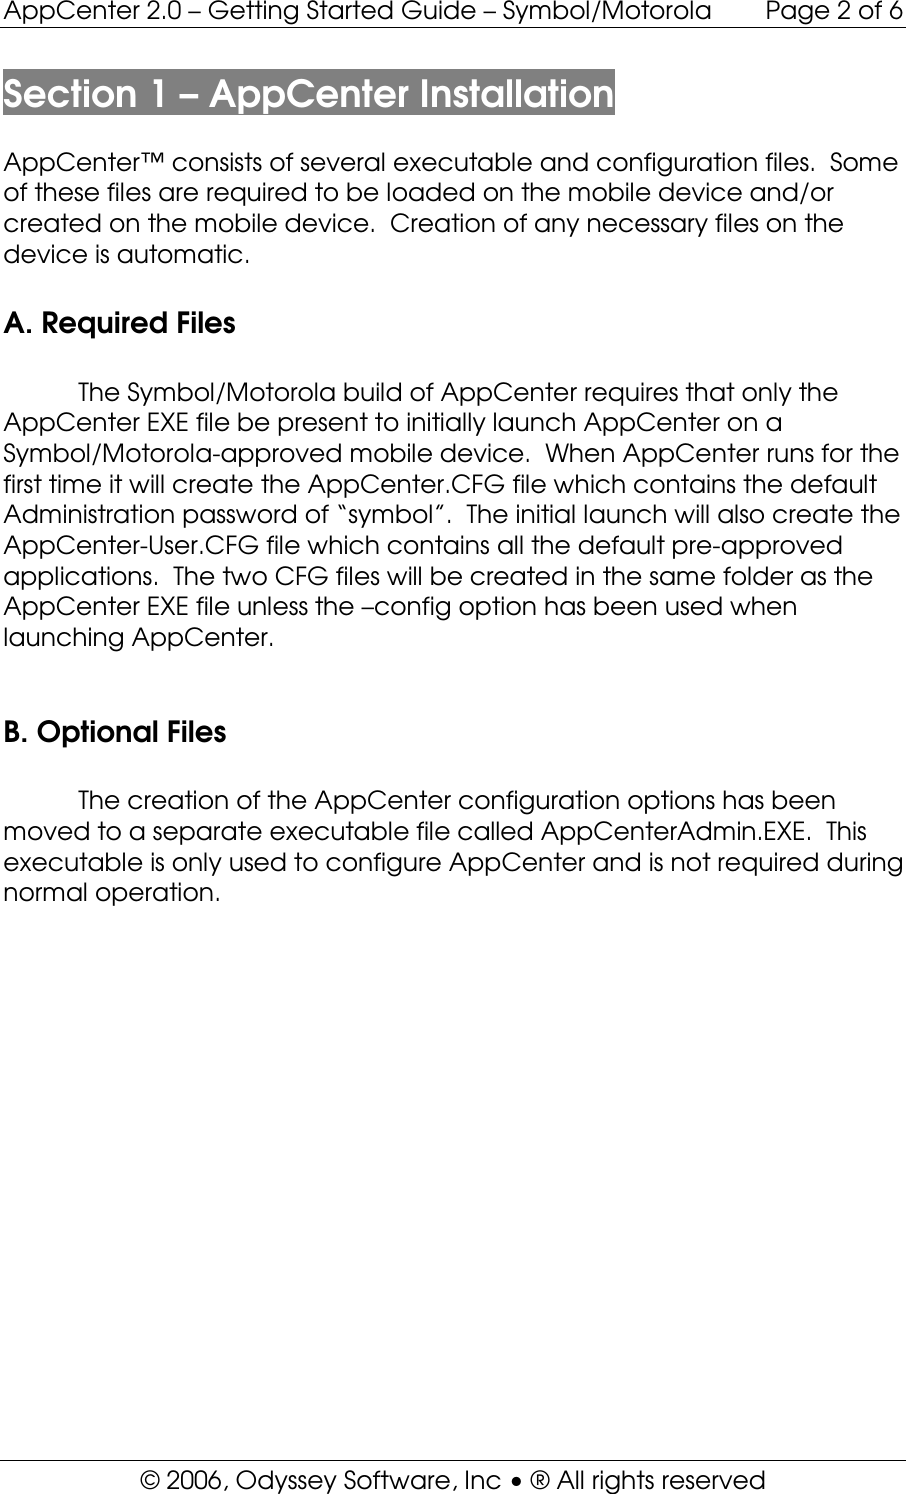 Page 3 of 6 - AppCenter 2.0 WM Getting Started Guide _Symbol-Motorola_ App Center (Symbol-Motorola)